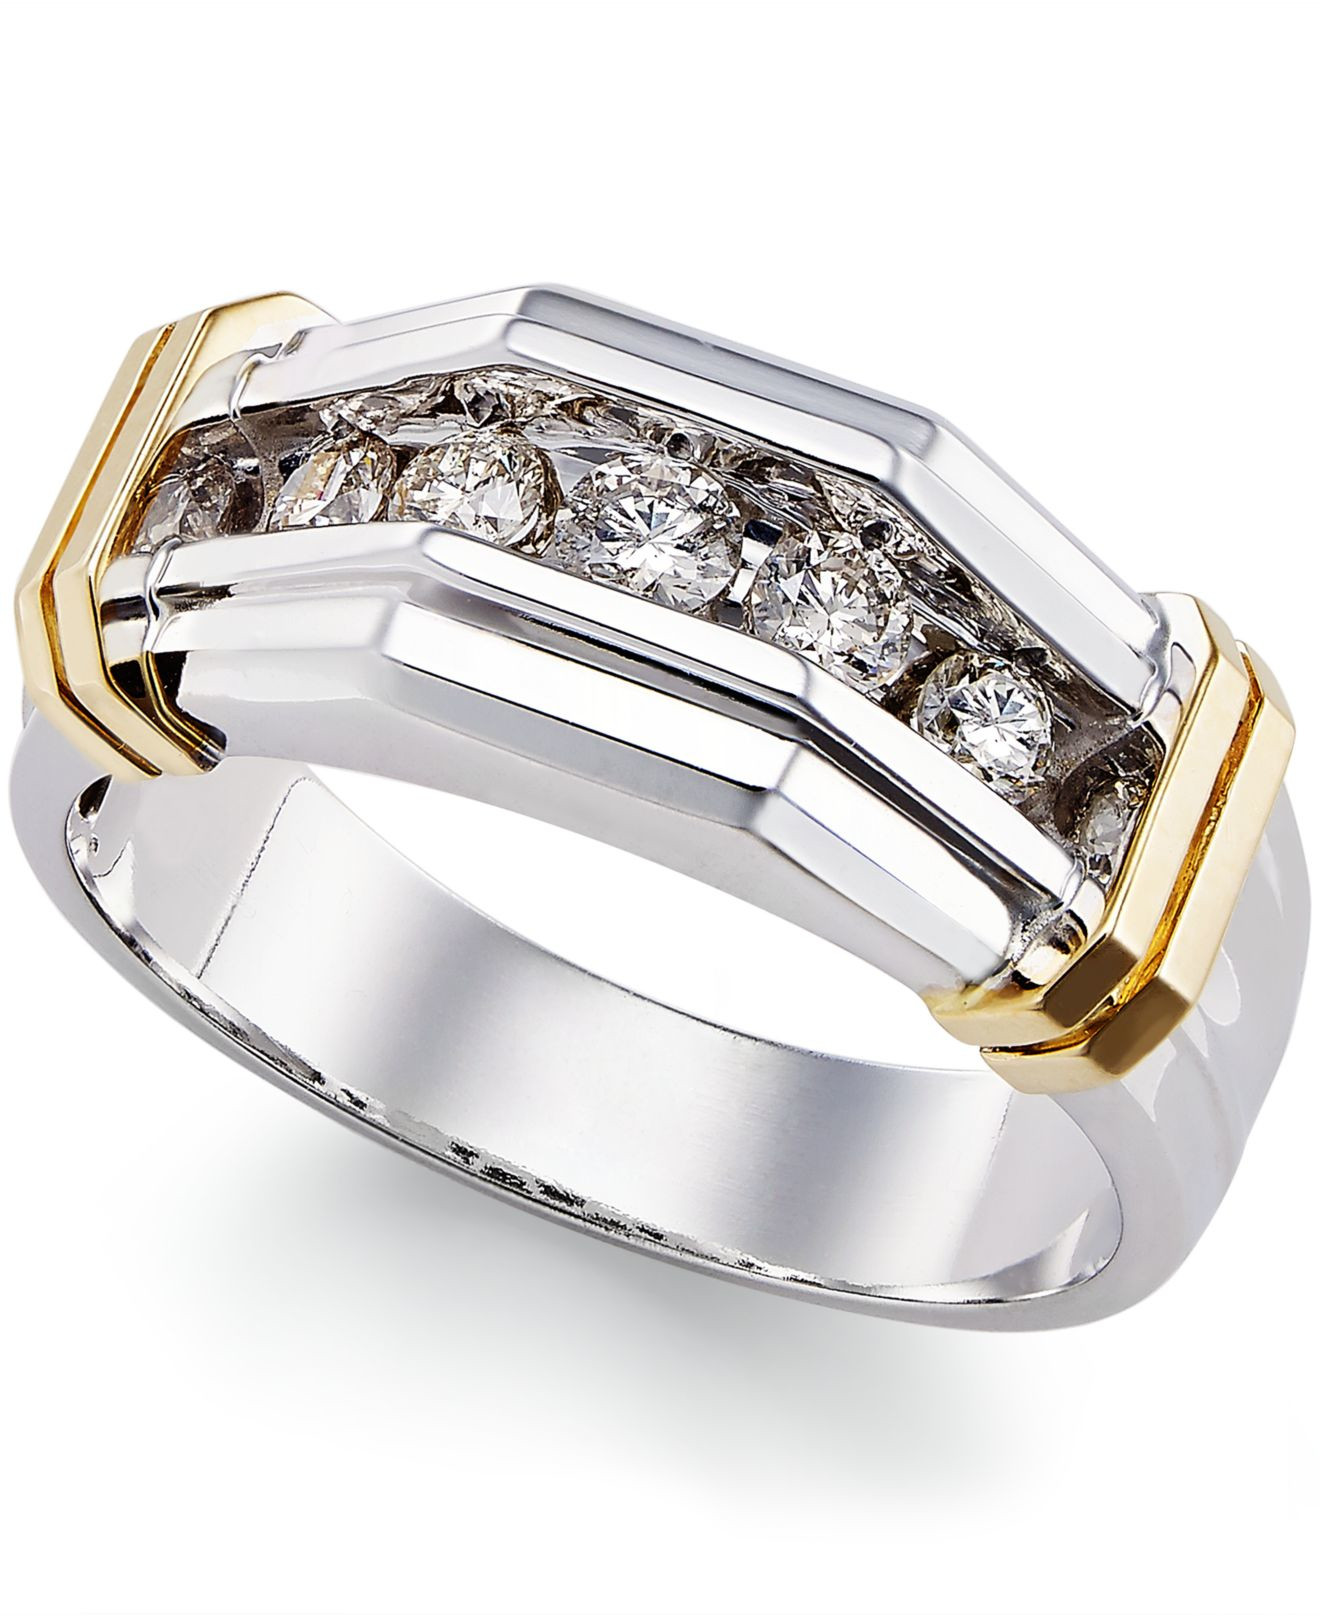 Mens Rings With Diamonds
 Macy s Men s Diamond 1 2 Ct T w Ring In 10k White Gold